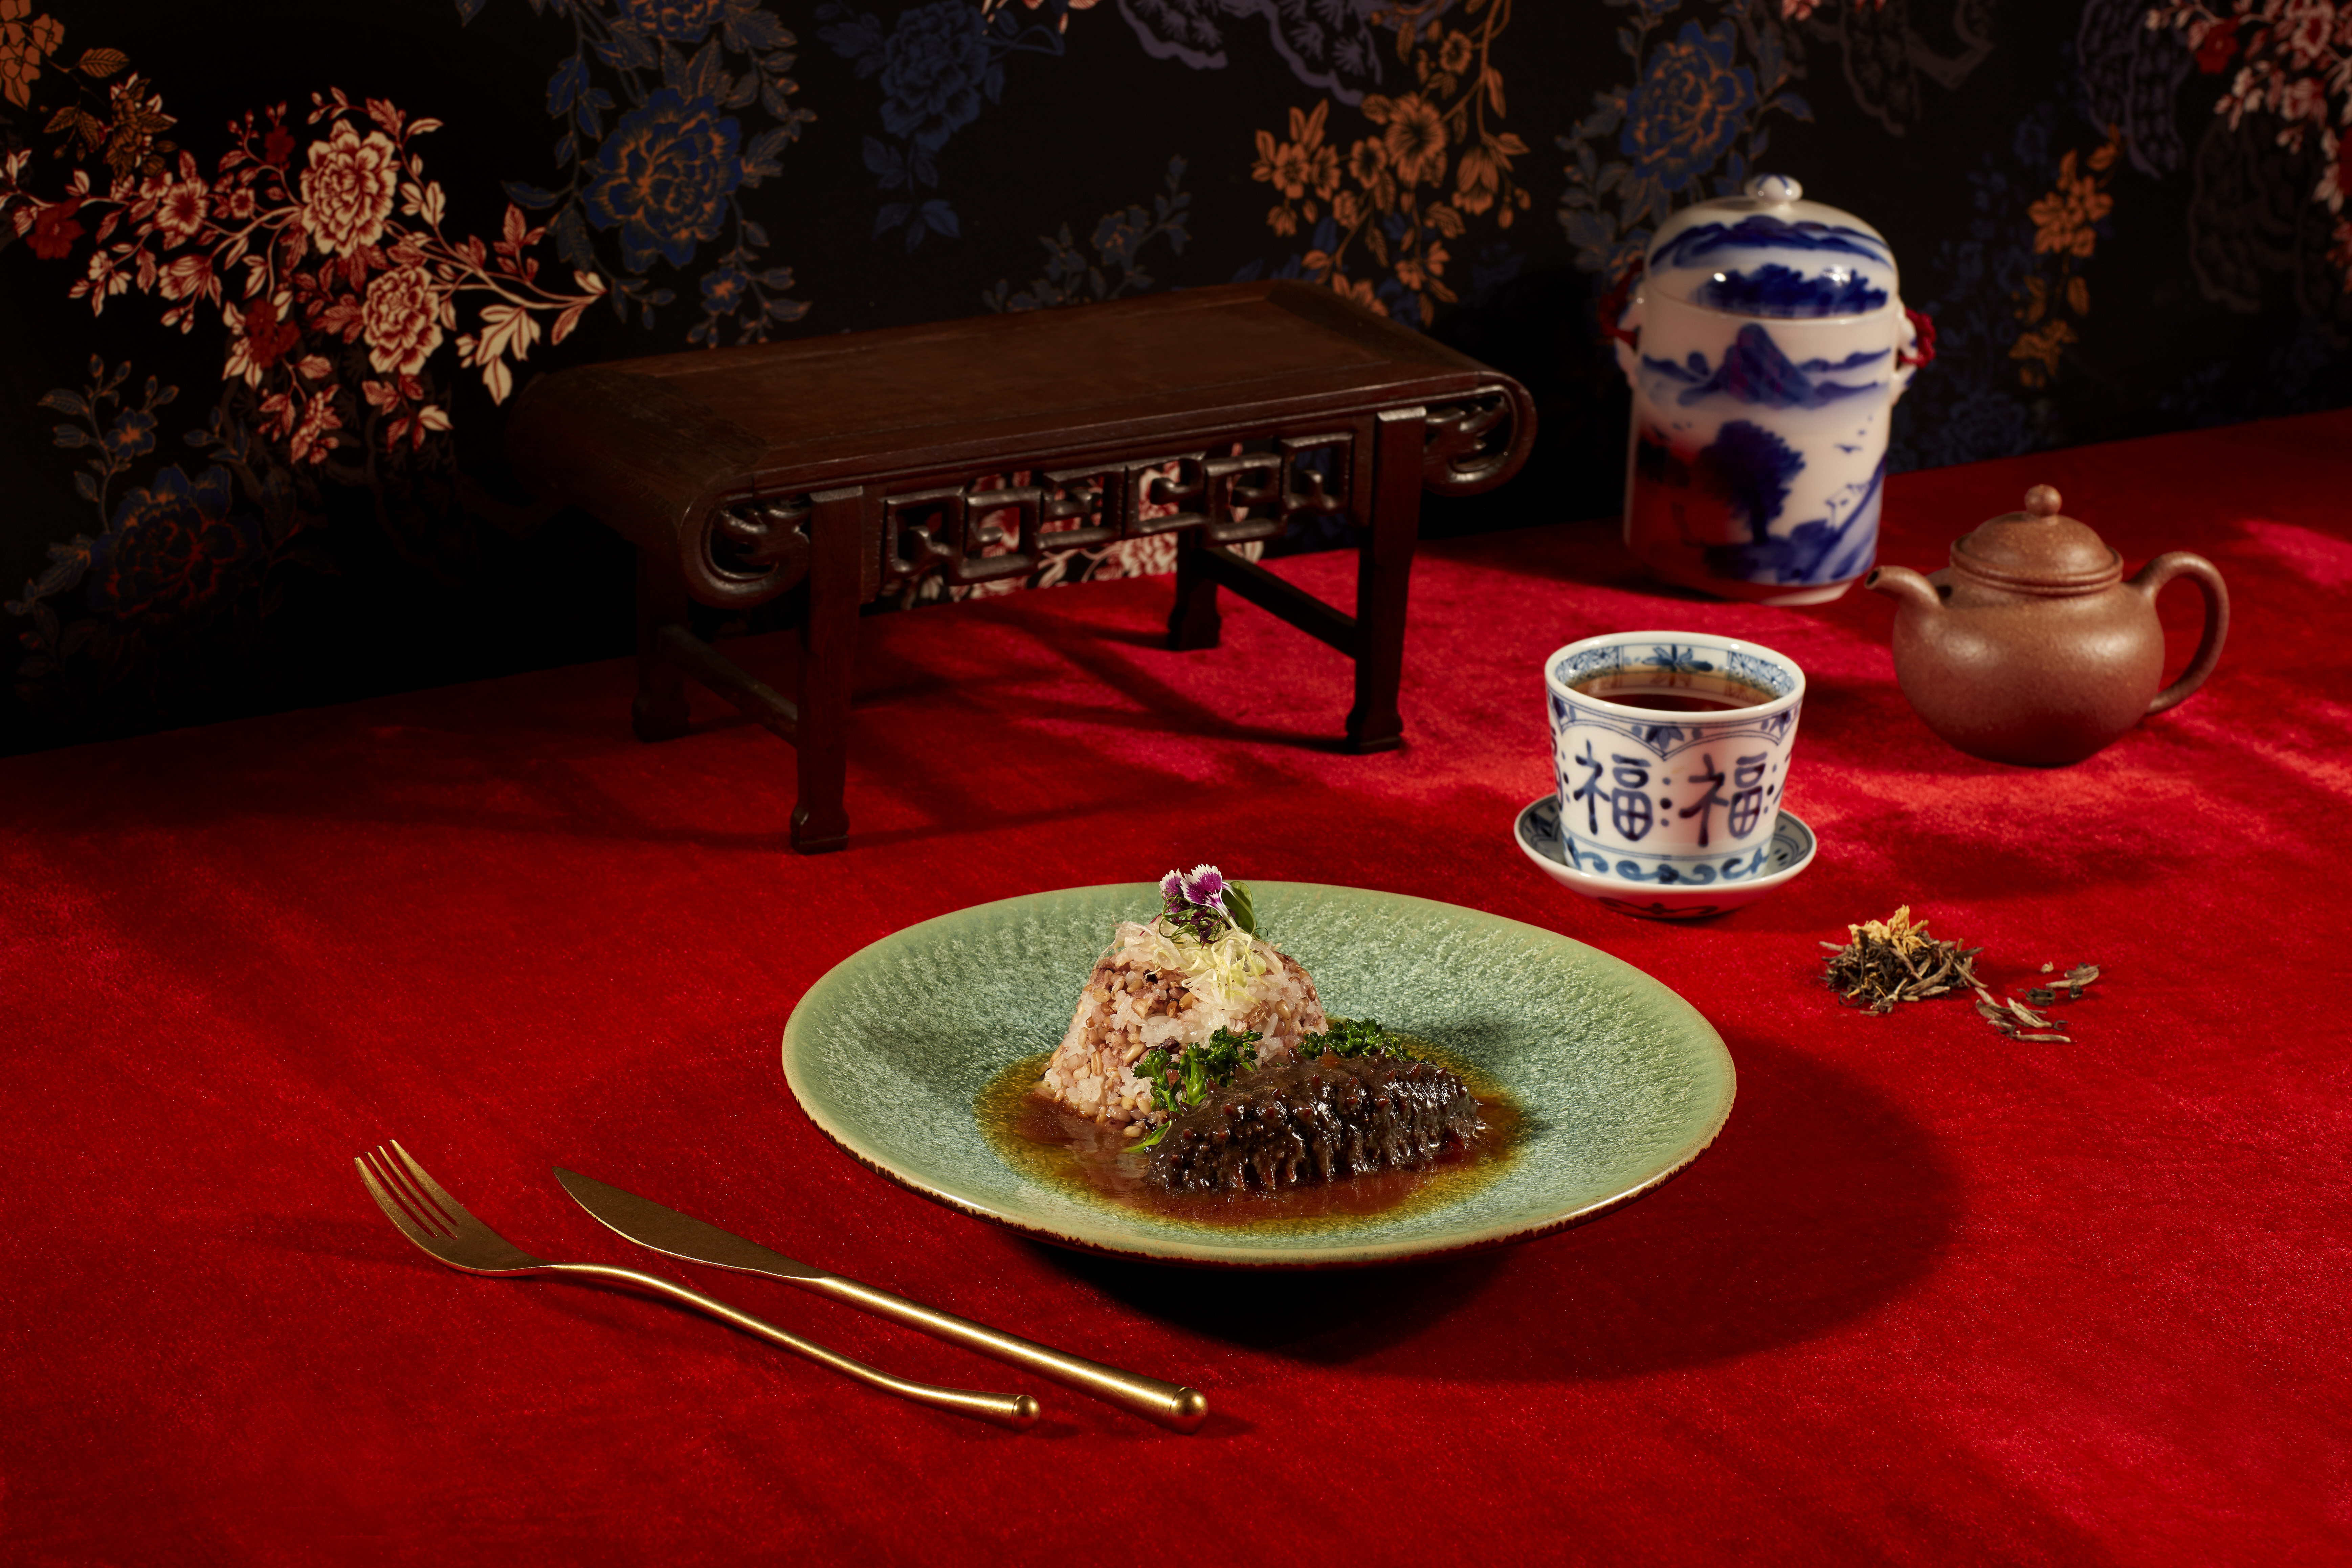 Braised Spiky Sea Cucumber with Leek, Fragrant Oil, and Five Grain Rice (葱油烧关东刺参伴五谷米饭) 